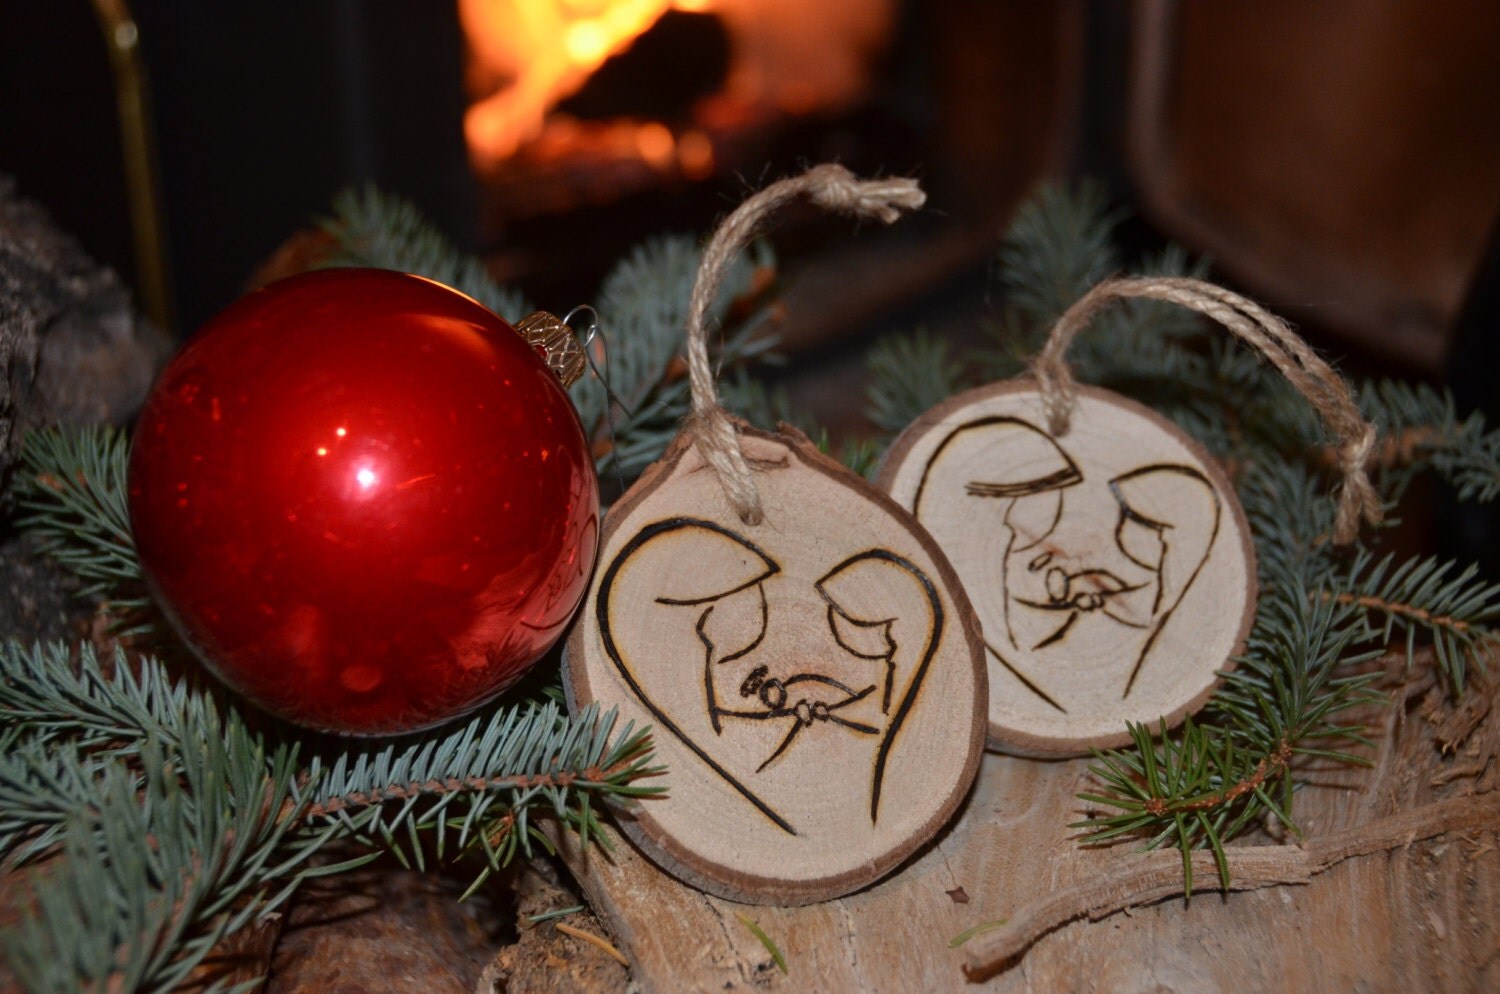 Nativity christmas ornament, Decoration, Holiday Handmade Teacher/Neighbor/Coworker Gift, Yuletide, Rustic Tree Branch, HandDrawn, Gift Wrap